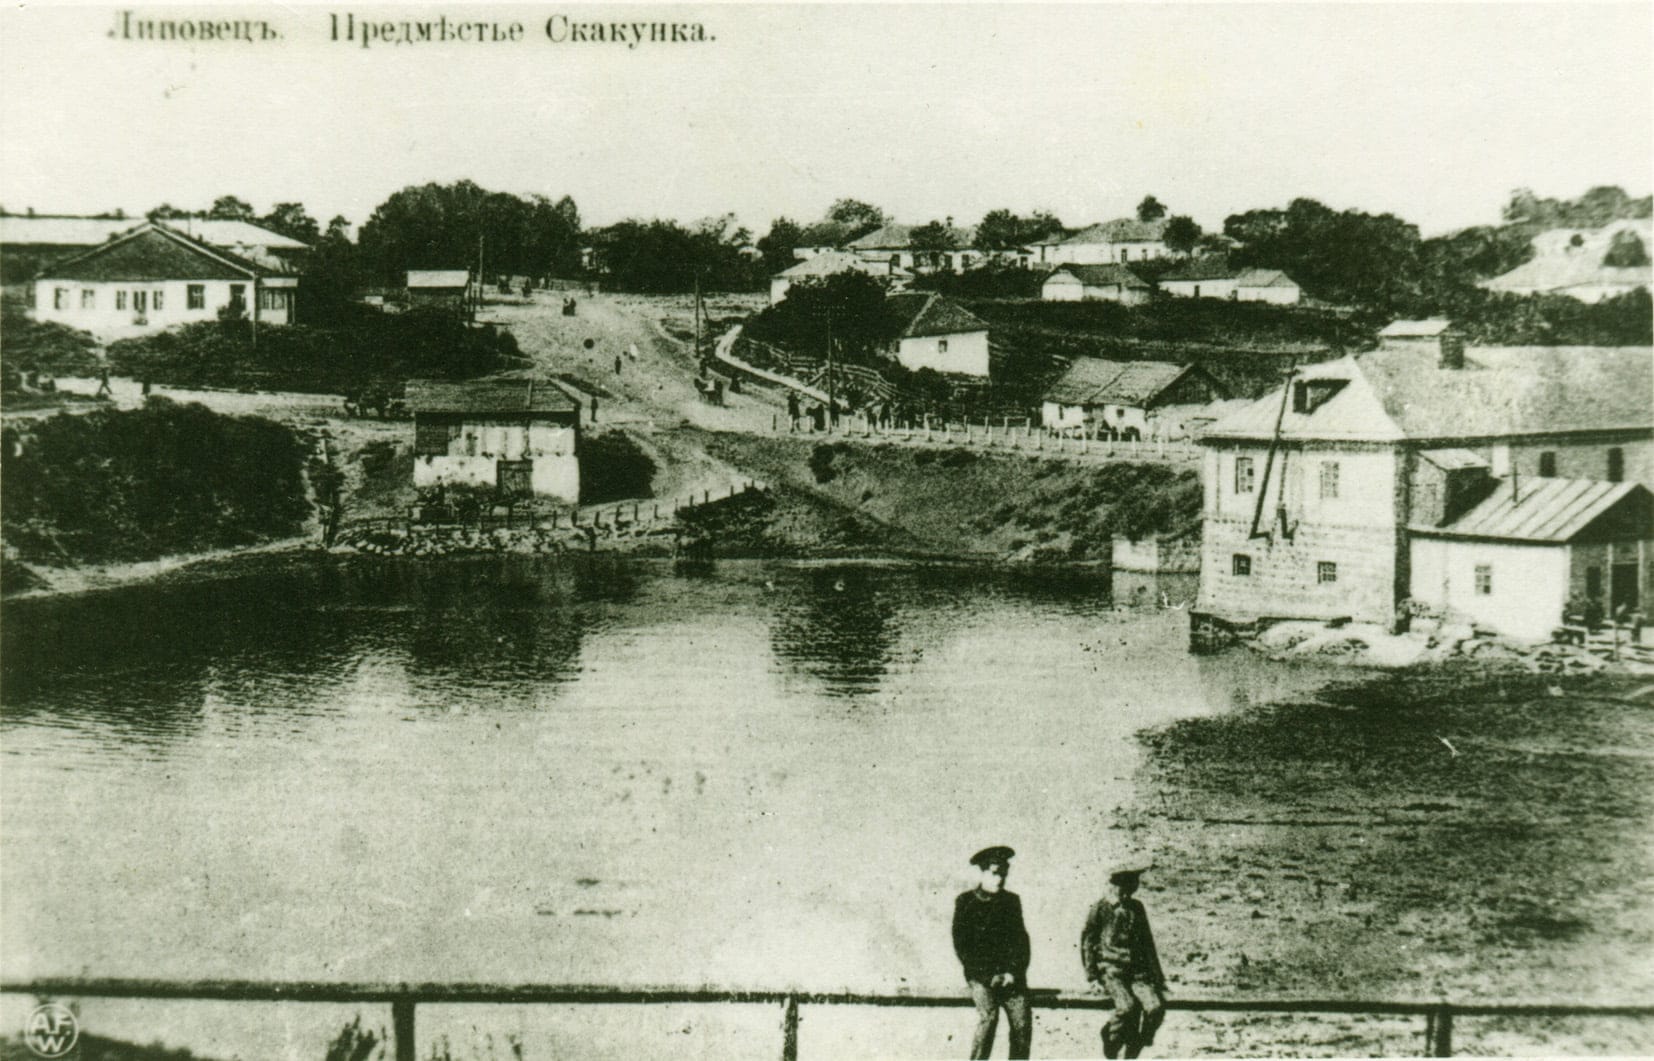 Lypovets, a suburb of Skakunka. Postcard, early 20th century